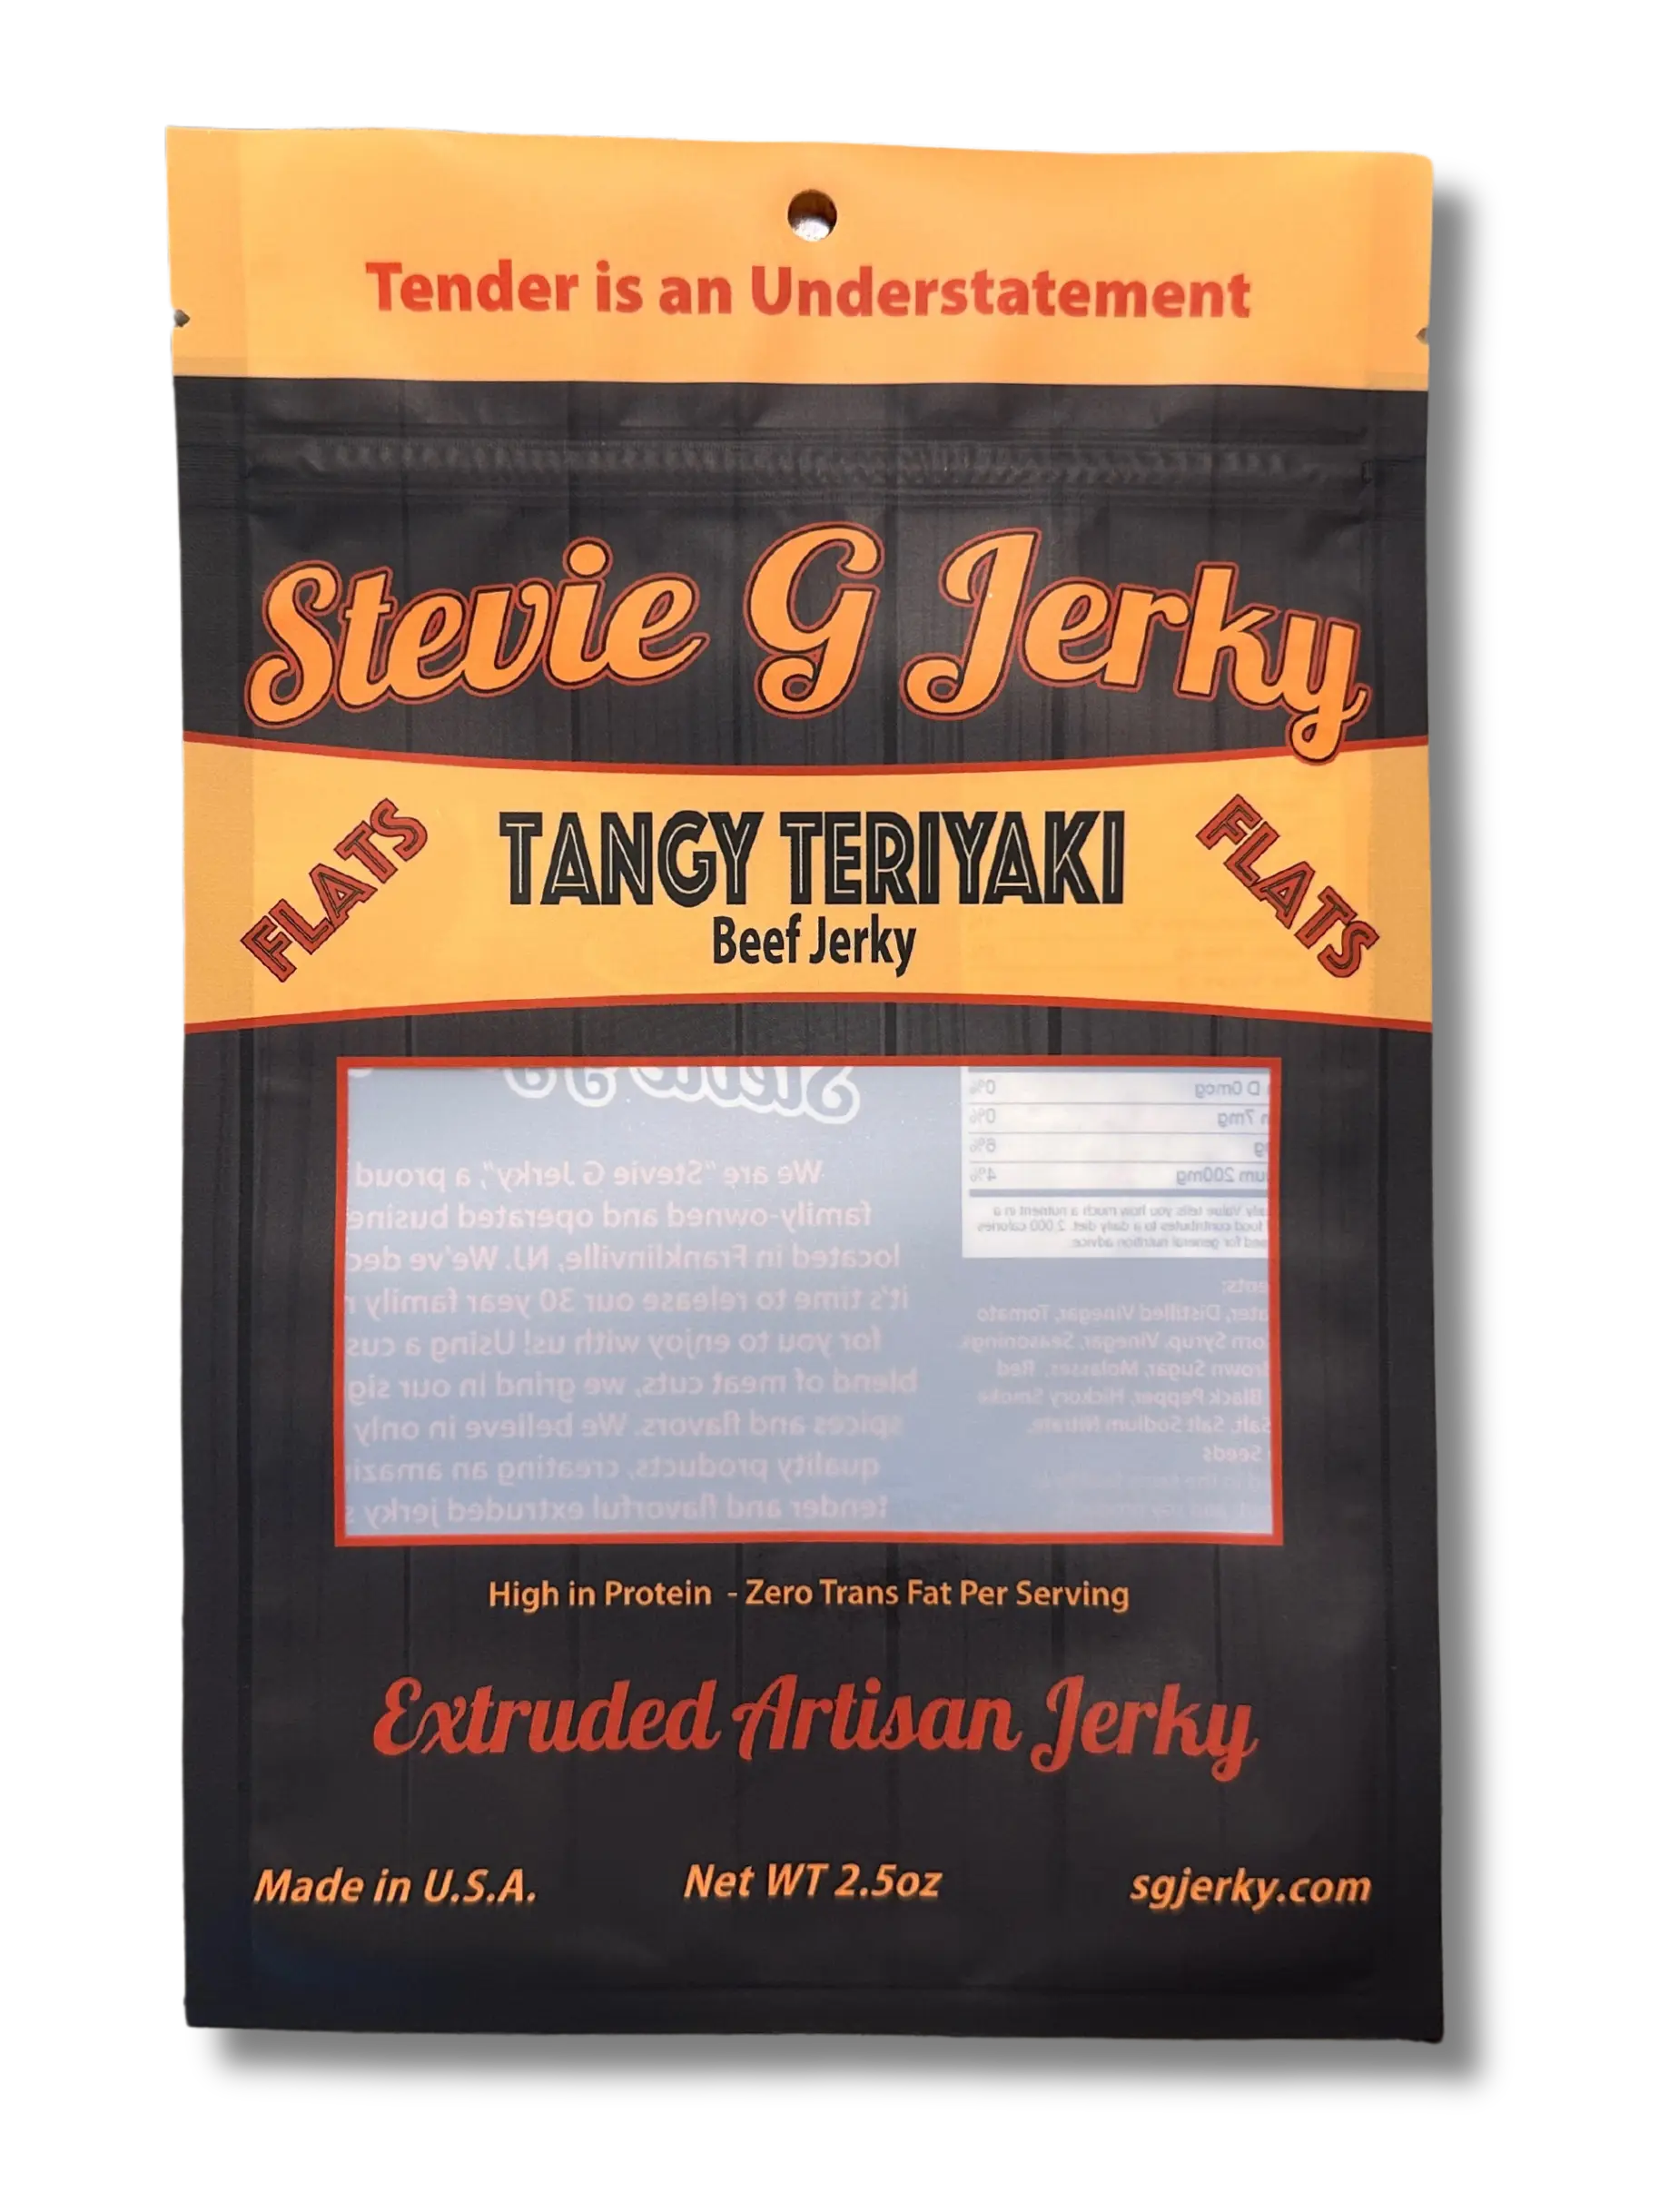 The Tangy Teriyaki Beef Jerky Bundle by Steve G